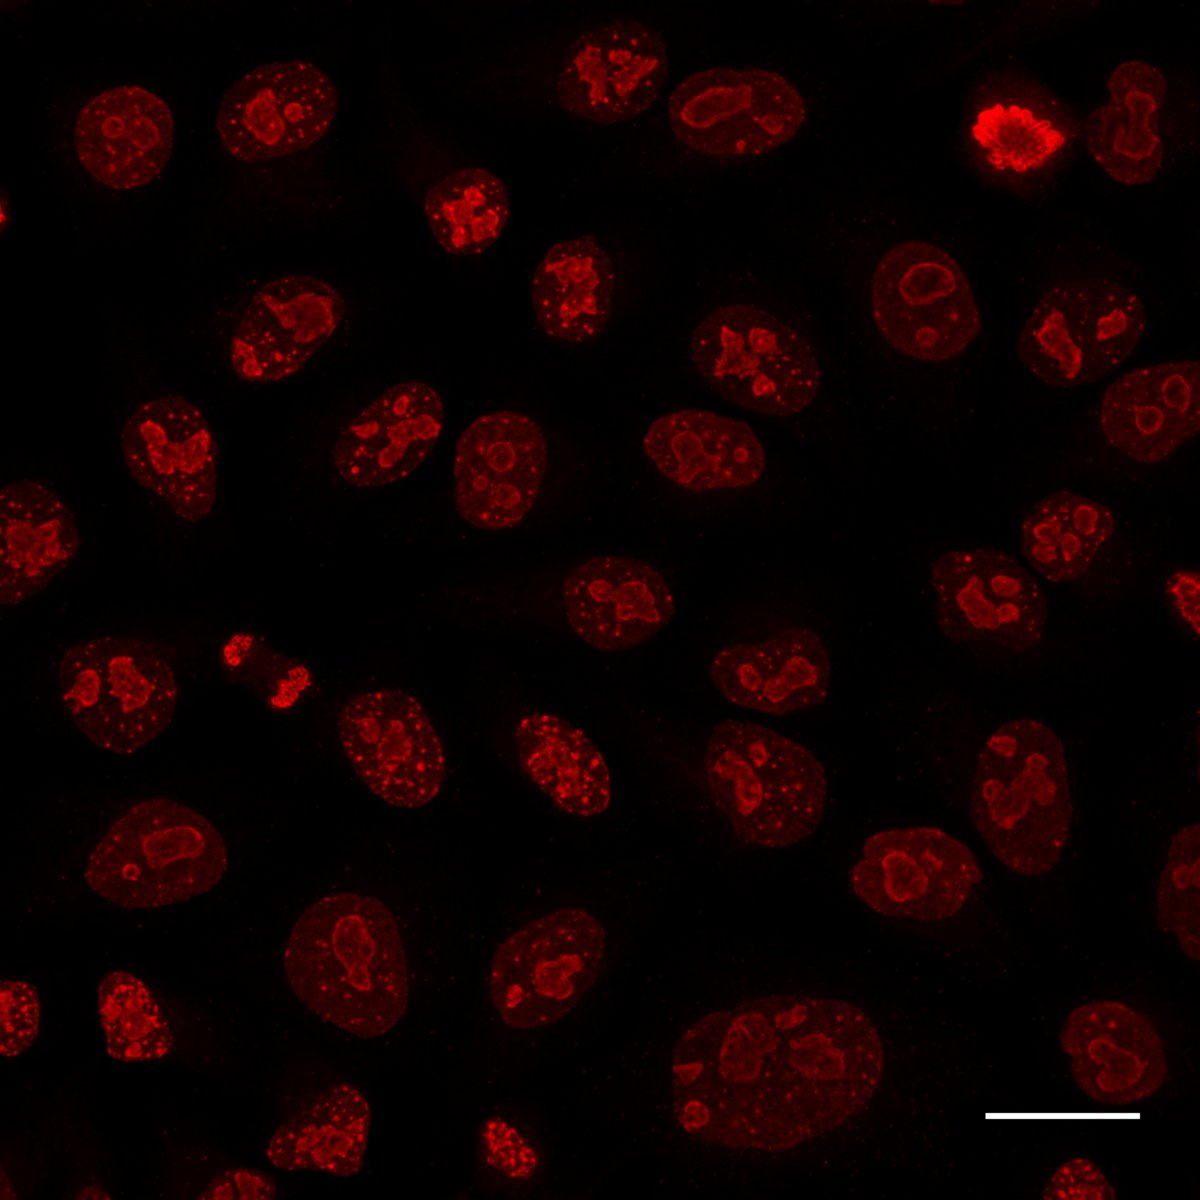 Immunostaining of Ki67 in HeLa cells with rabbit anti-Ki67 antibodies and Nano-Secondary® alpaca anti-human IgG/anti-rabbit IgG, recombinant VHH, Alexa Fluor®568 [CTK0101, CTK0102] 1:1,000 (red). Scale bar, 20 µm.